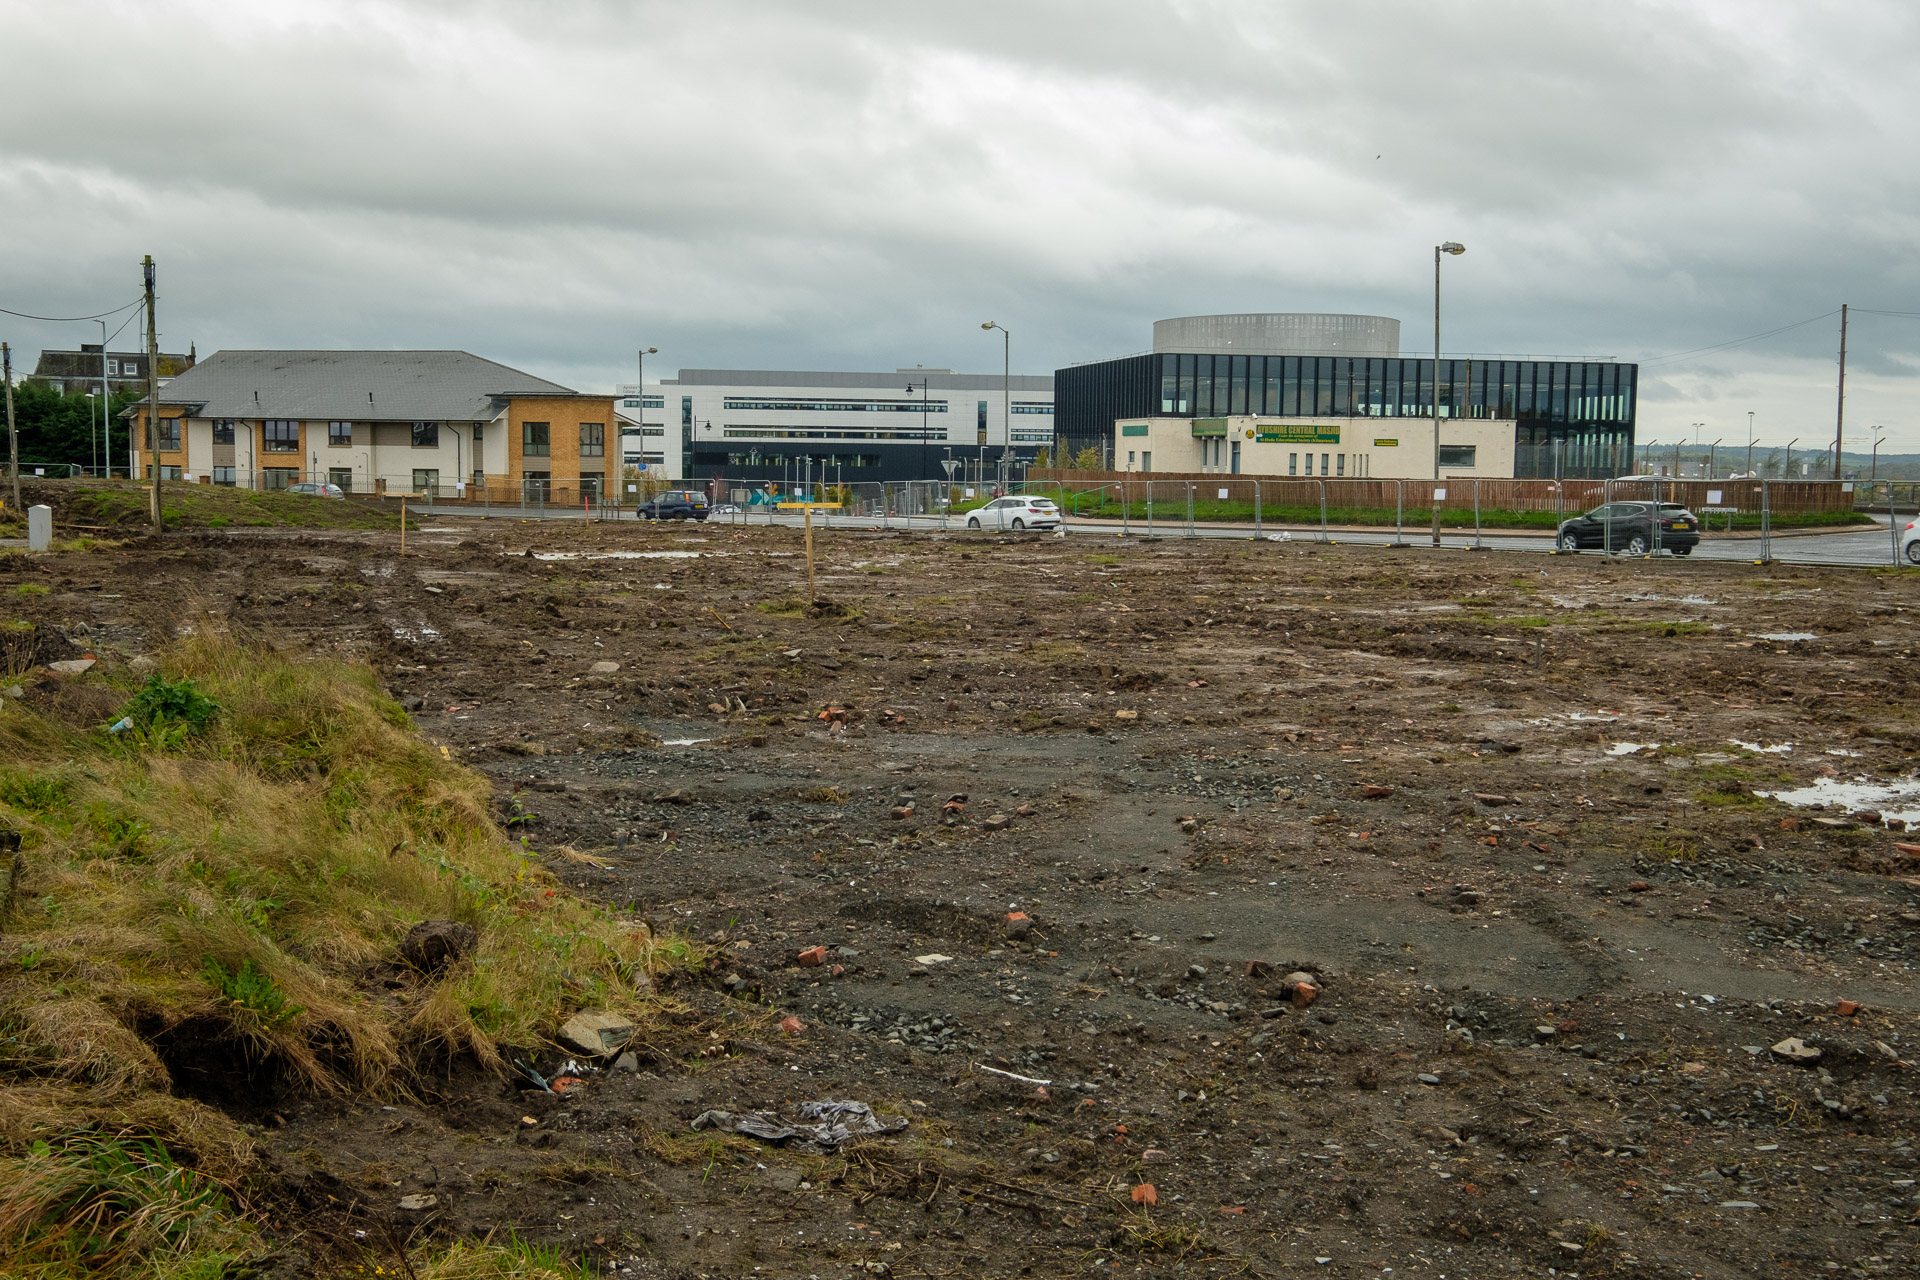 CCG starts work on new council housing development in Kilmarnock